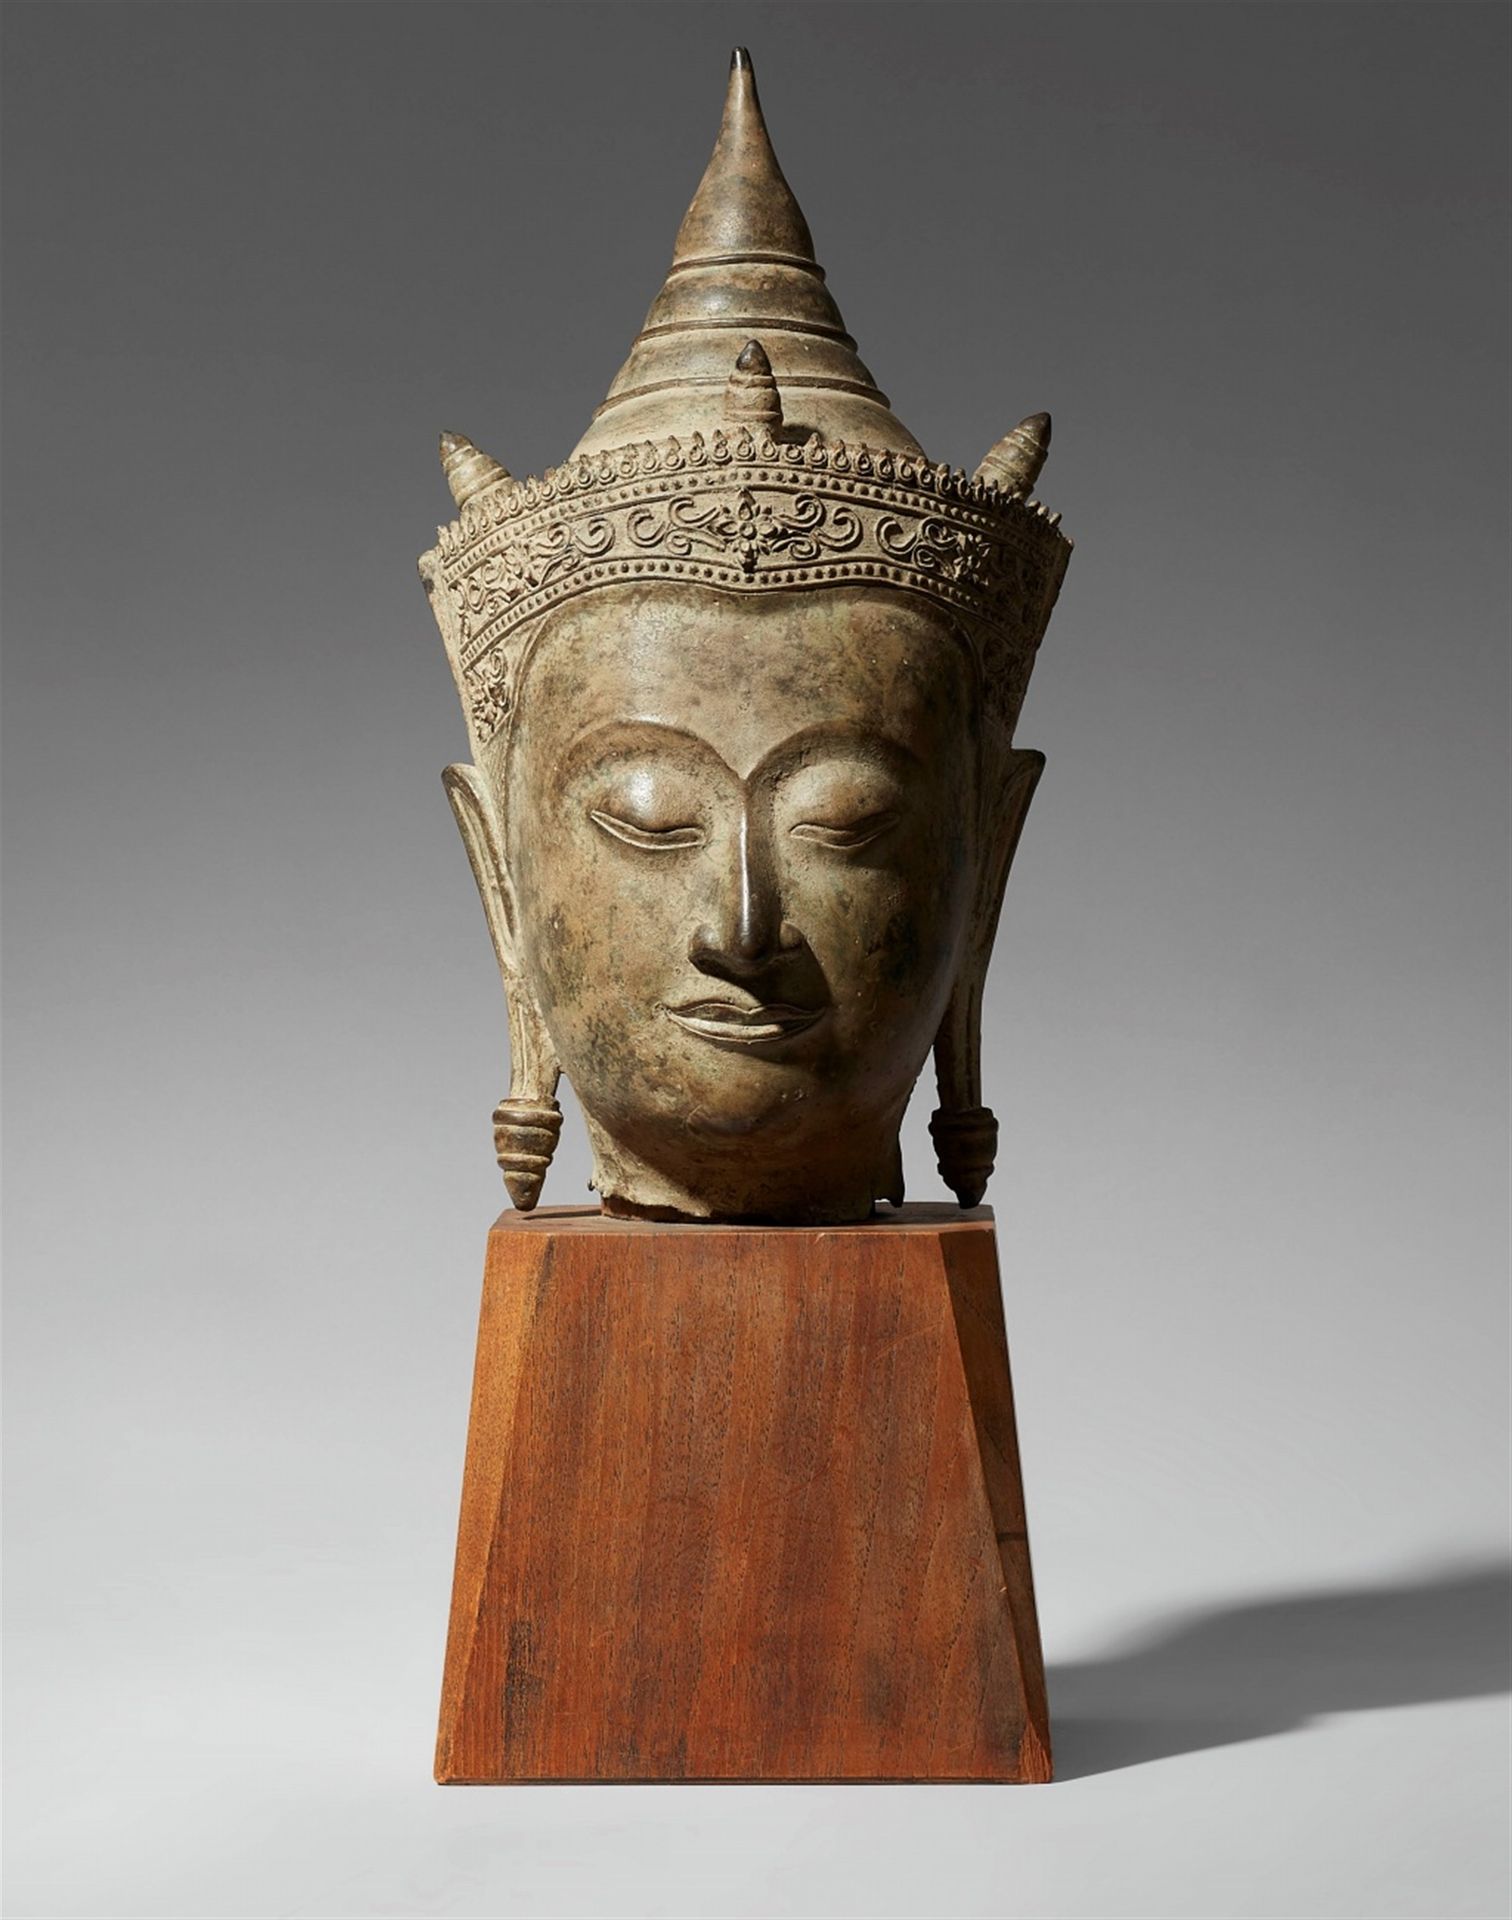 Null 大头的王公贵族装饰佛像。泰国，大城府，16/17世纪。



面部特征均匀，拱形眉毛下的眼睛呈弧形，嘴巴呈双重轮廓。头上有一顶装饰丰富的王冠，头顶和后&hellip;